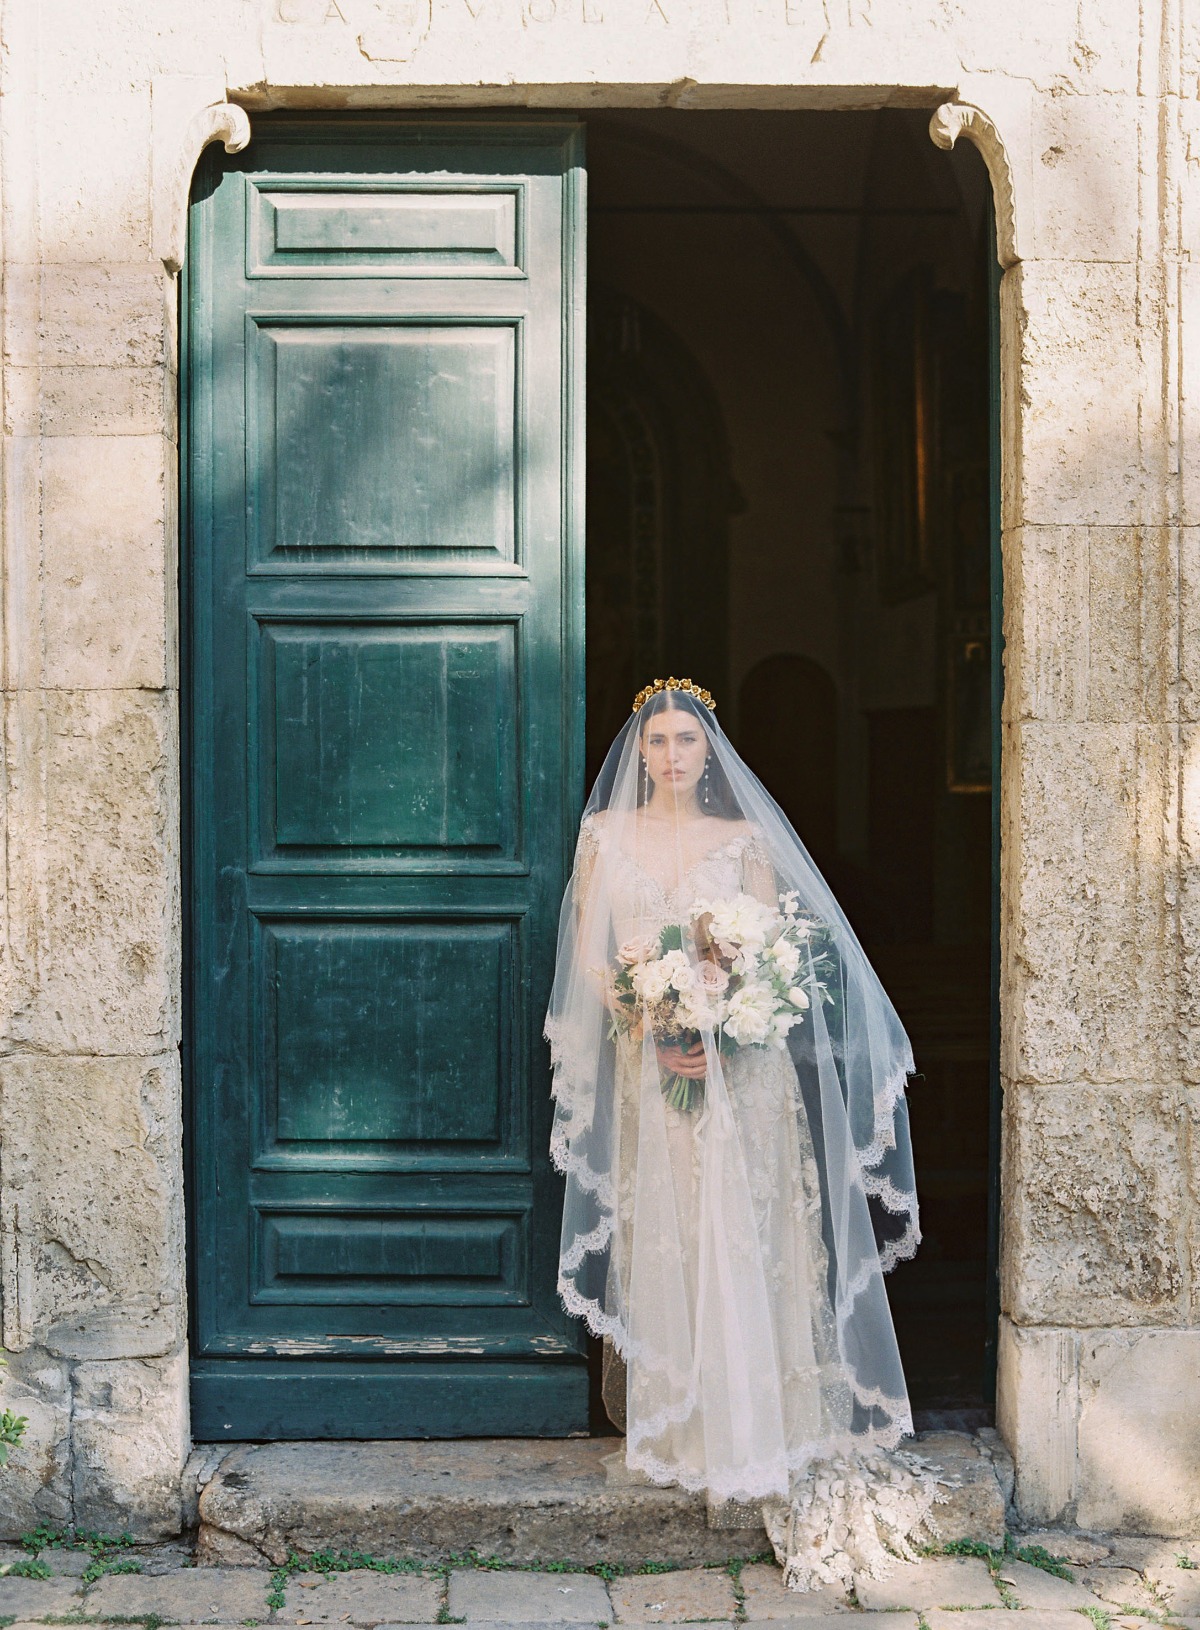 Ethereal Italian bride leaning on vintage green door 